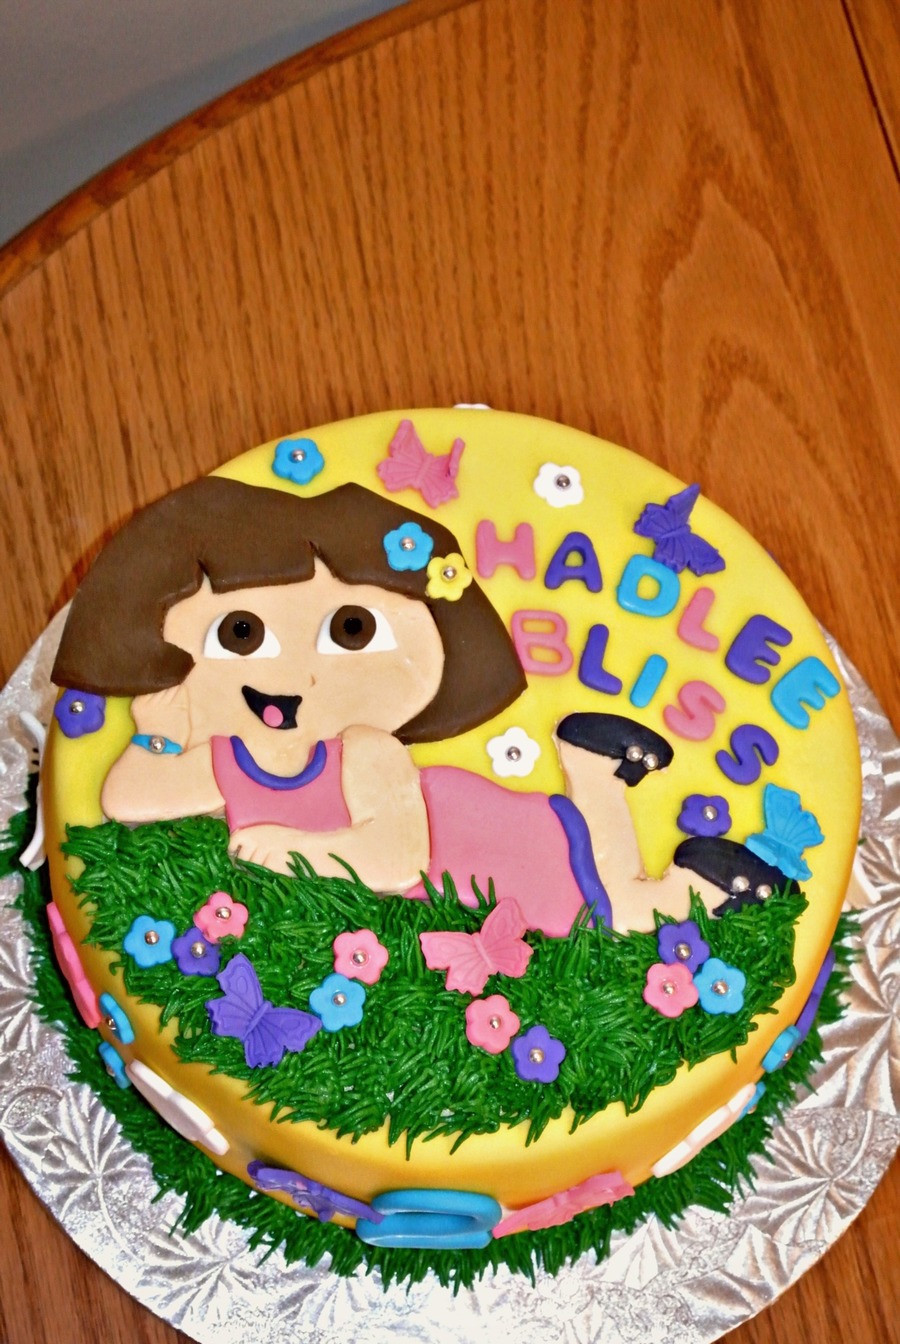 Edible Birthday Cake Decorations
 Dora The Explorer Themed 2Nd Birthday Cake Dora Is Handcut